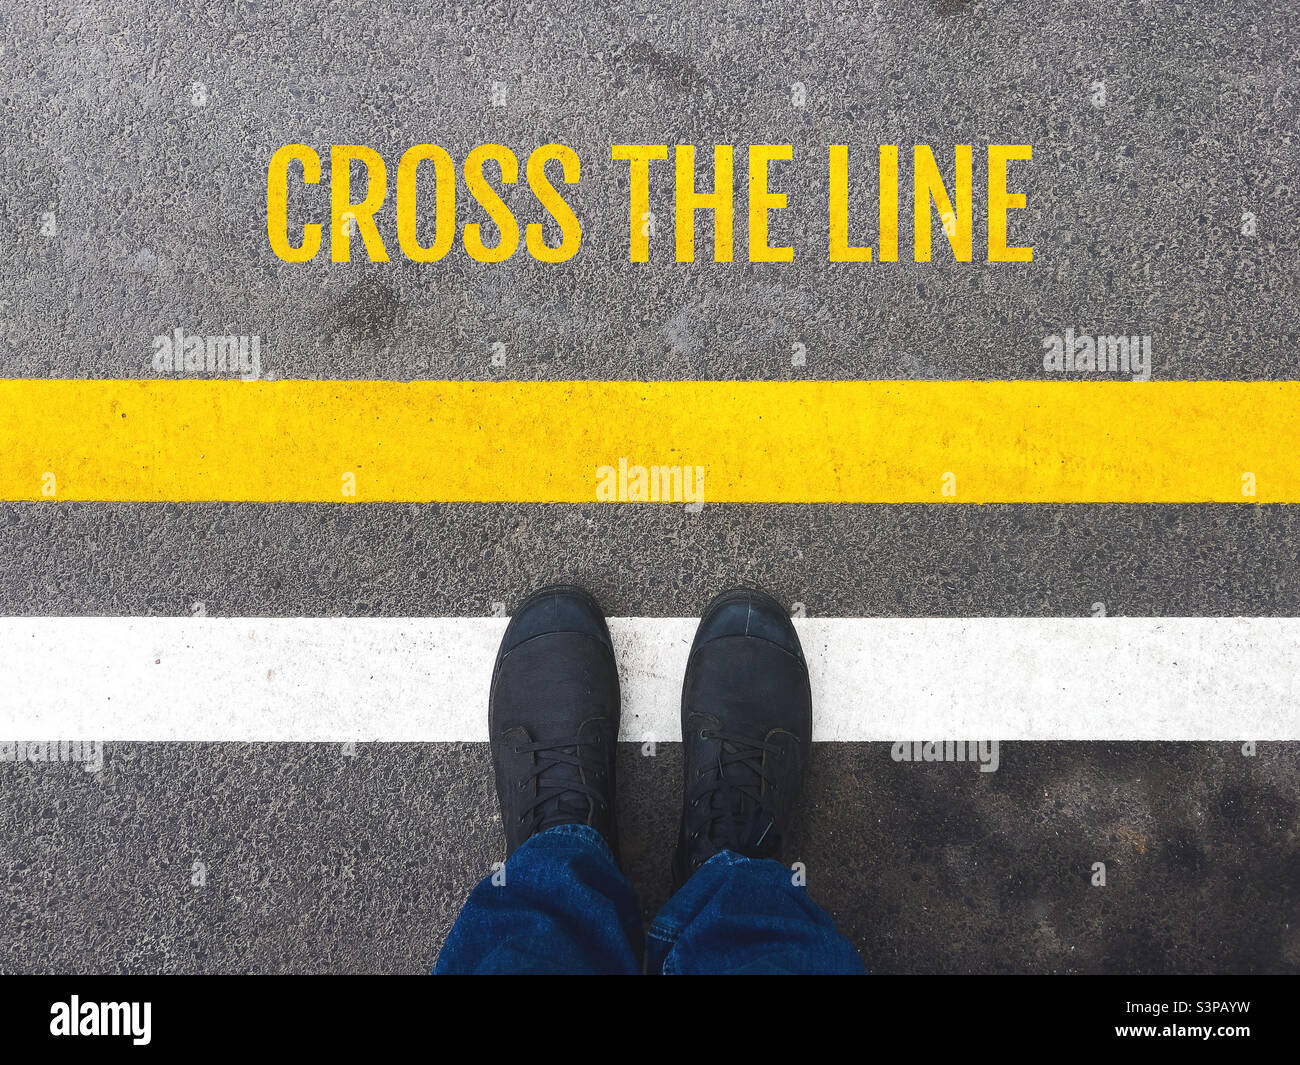 Cross the line message on asphalt road Stock Photo - Alamy